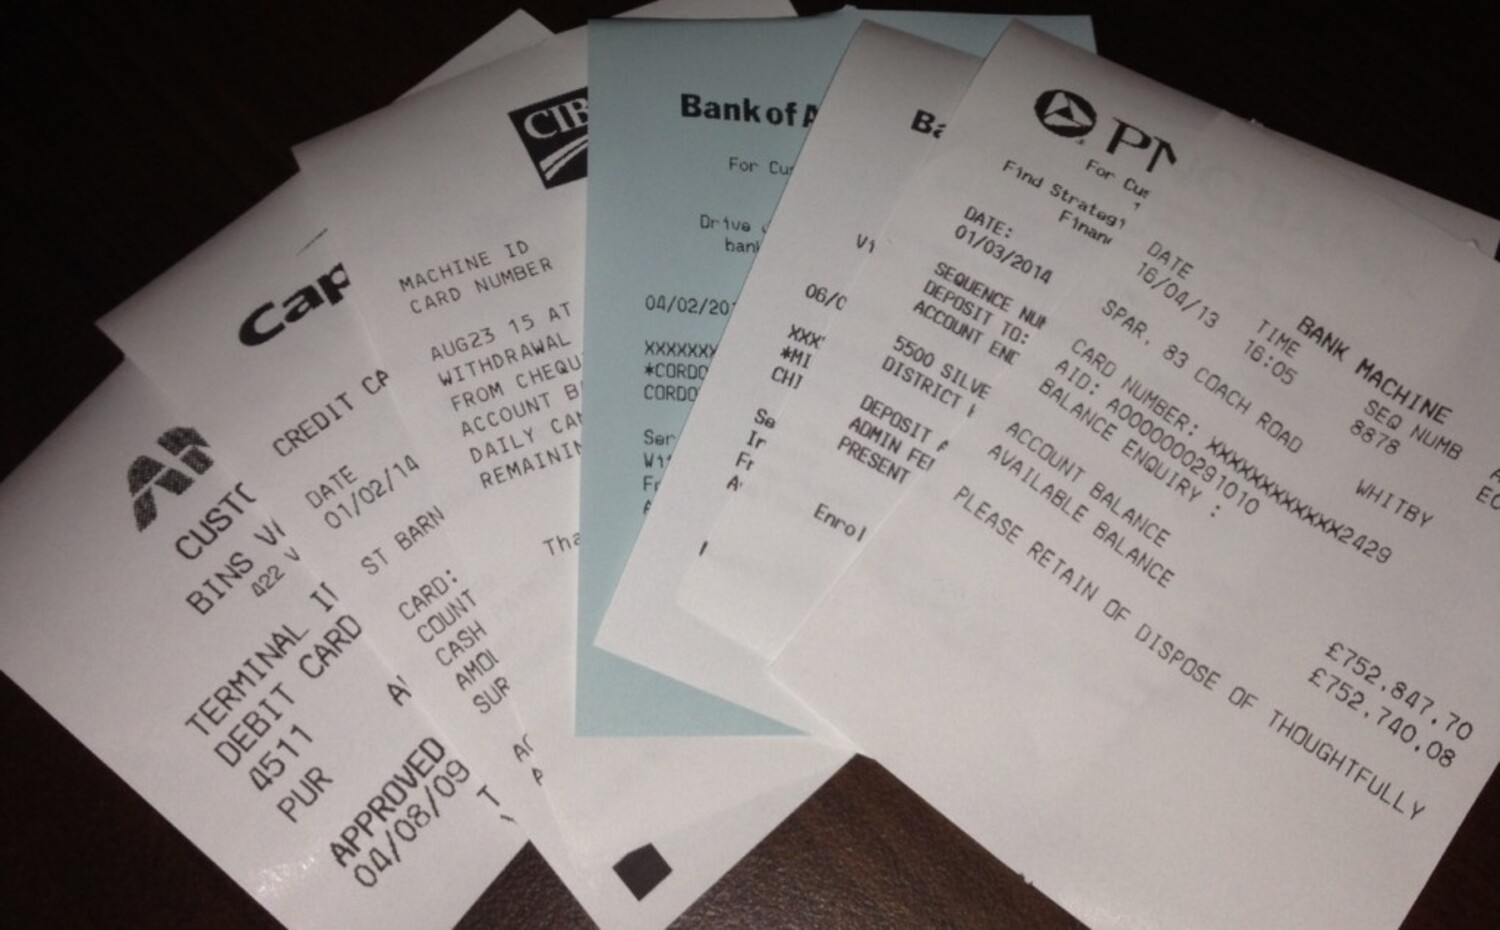 ATM receipts